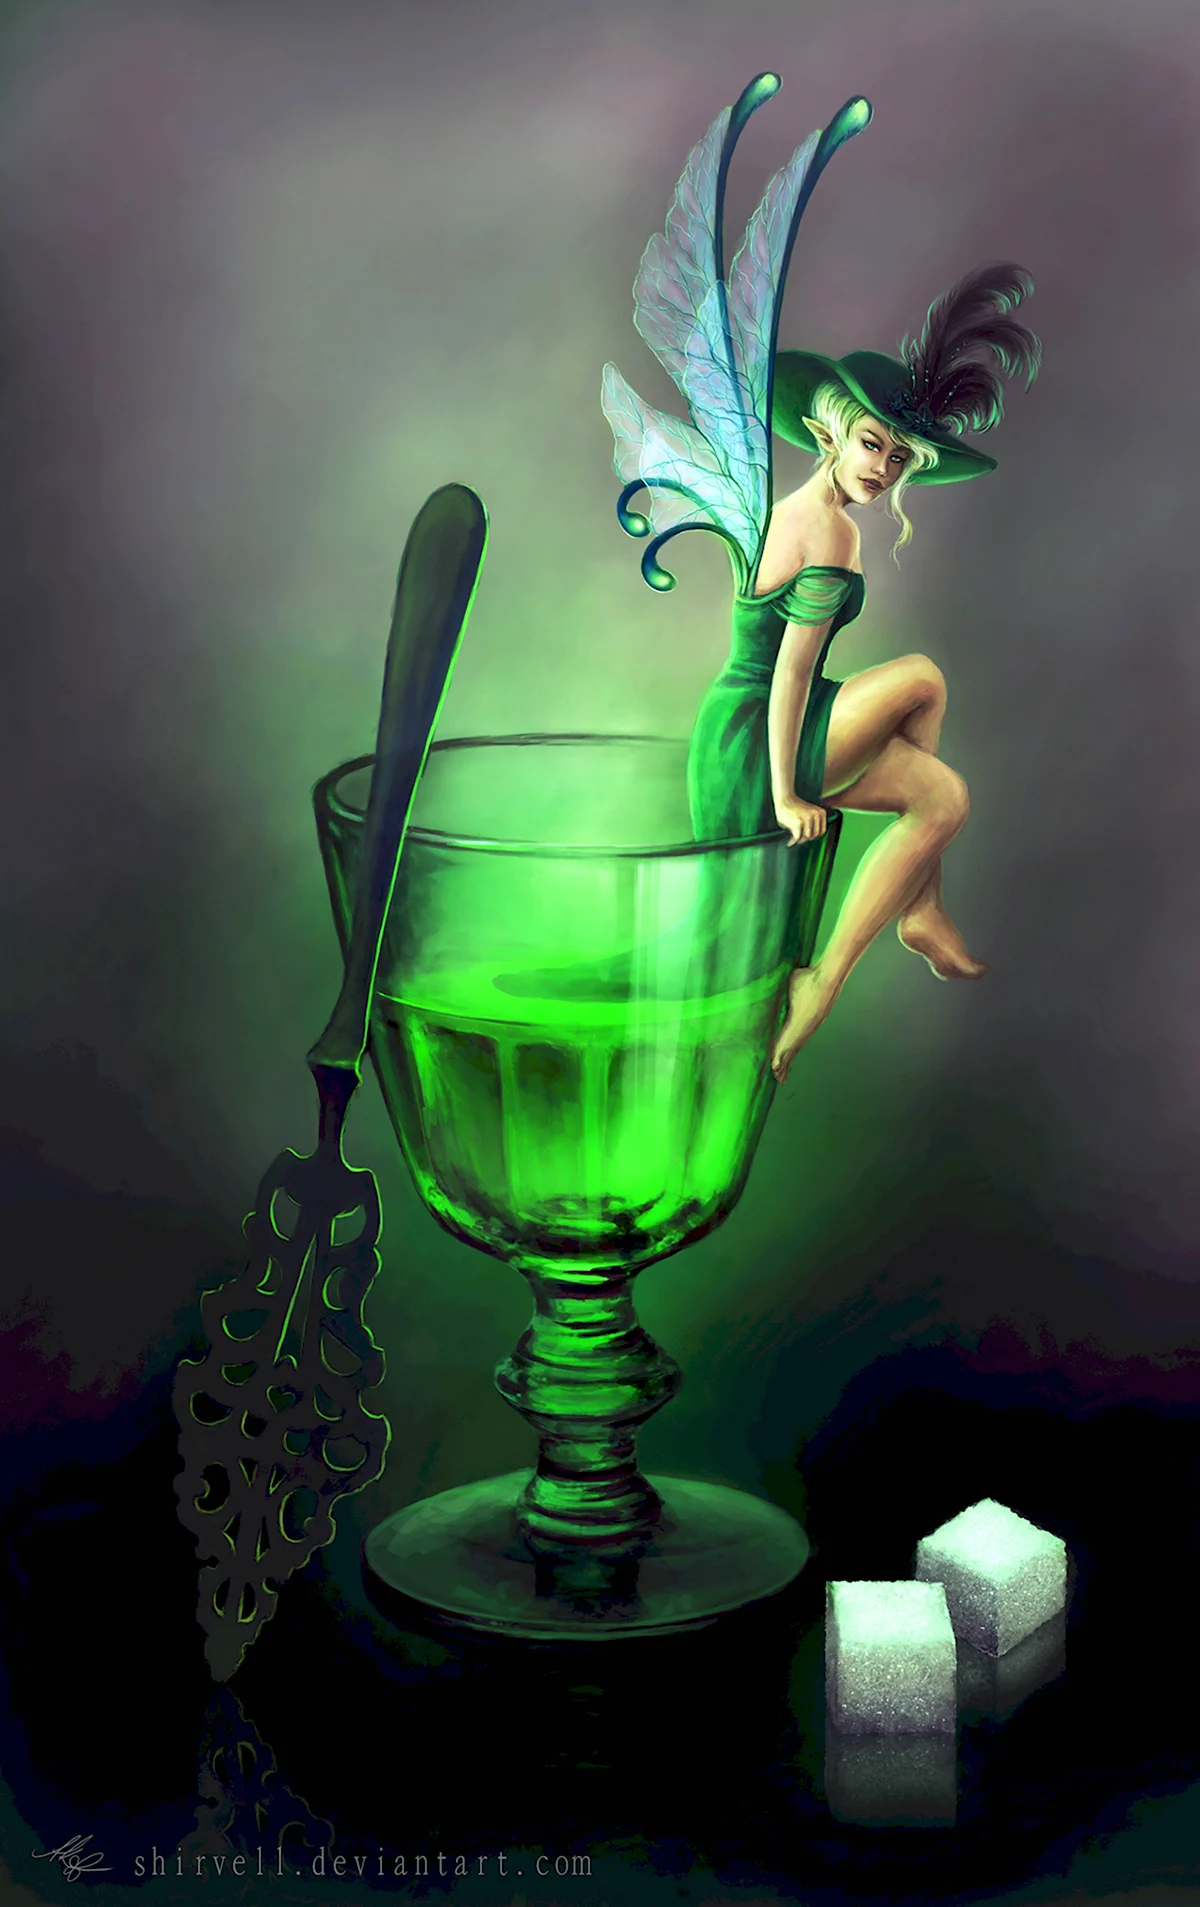 Зеленая фея